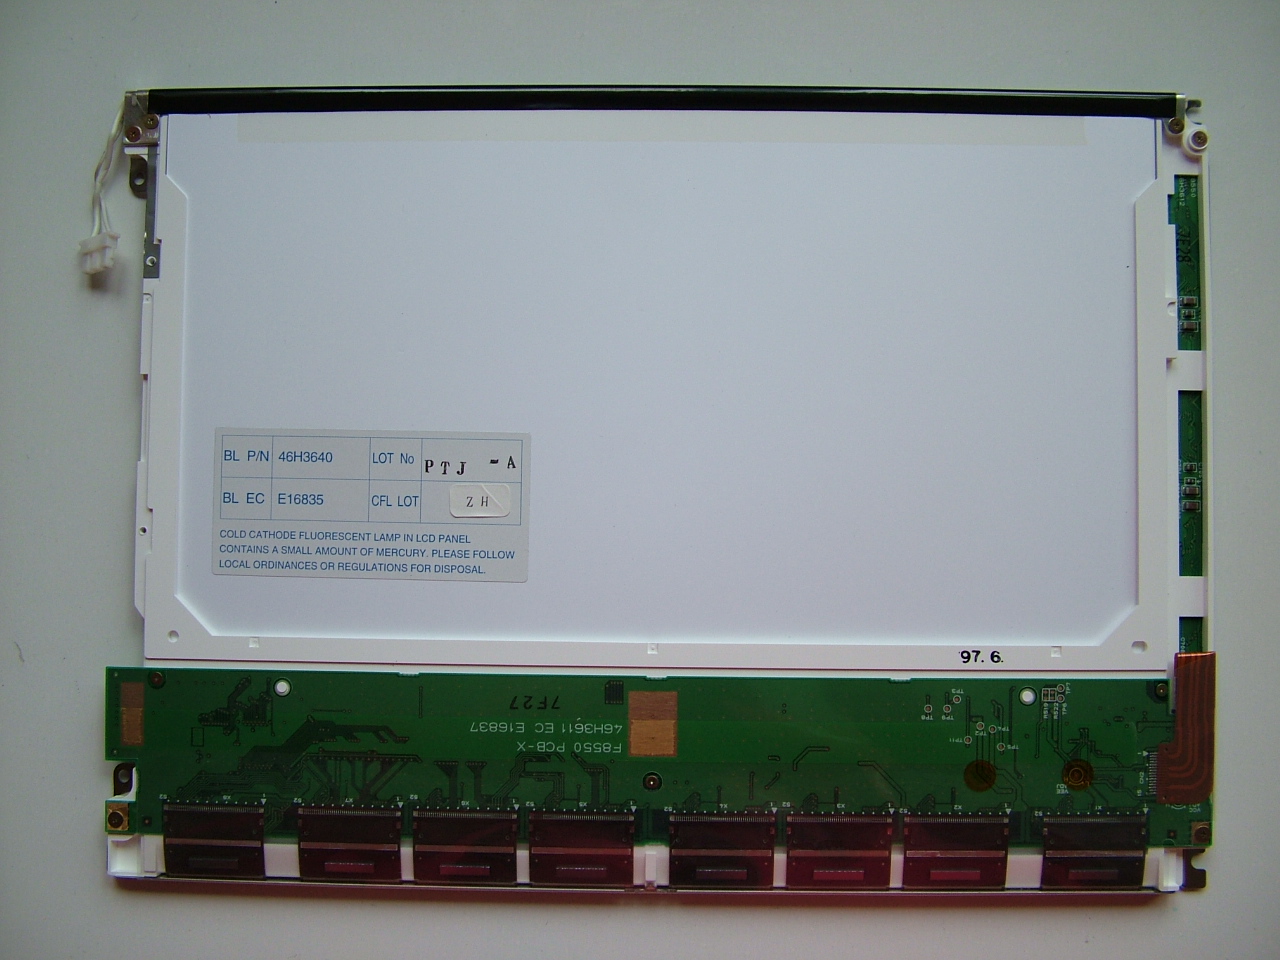 46H3580, 46H3640, IBM, ThinkPad 560, 12.1" COLOR LCD, Resolution